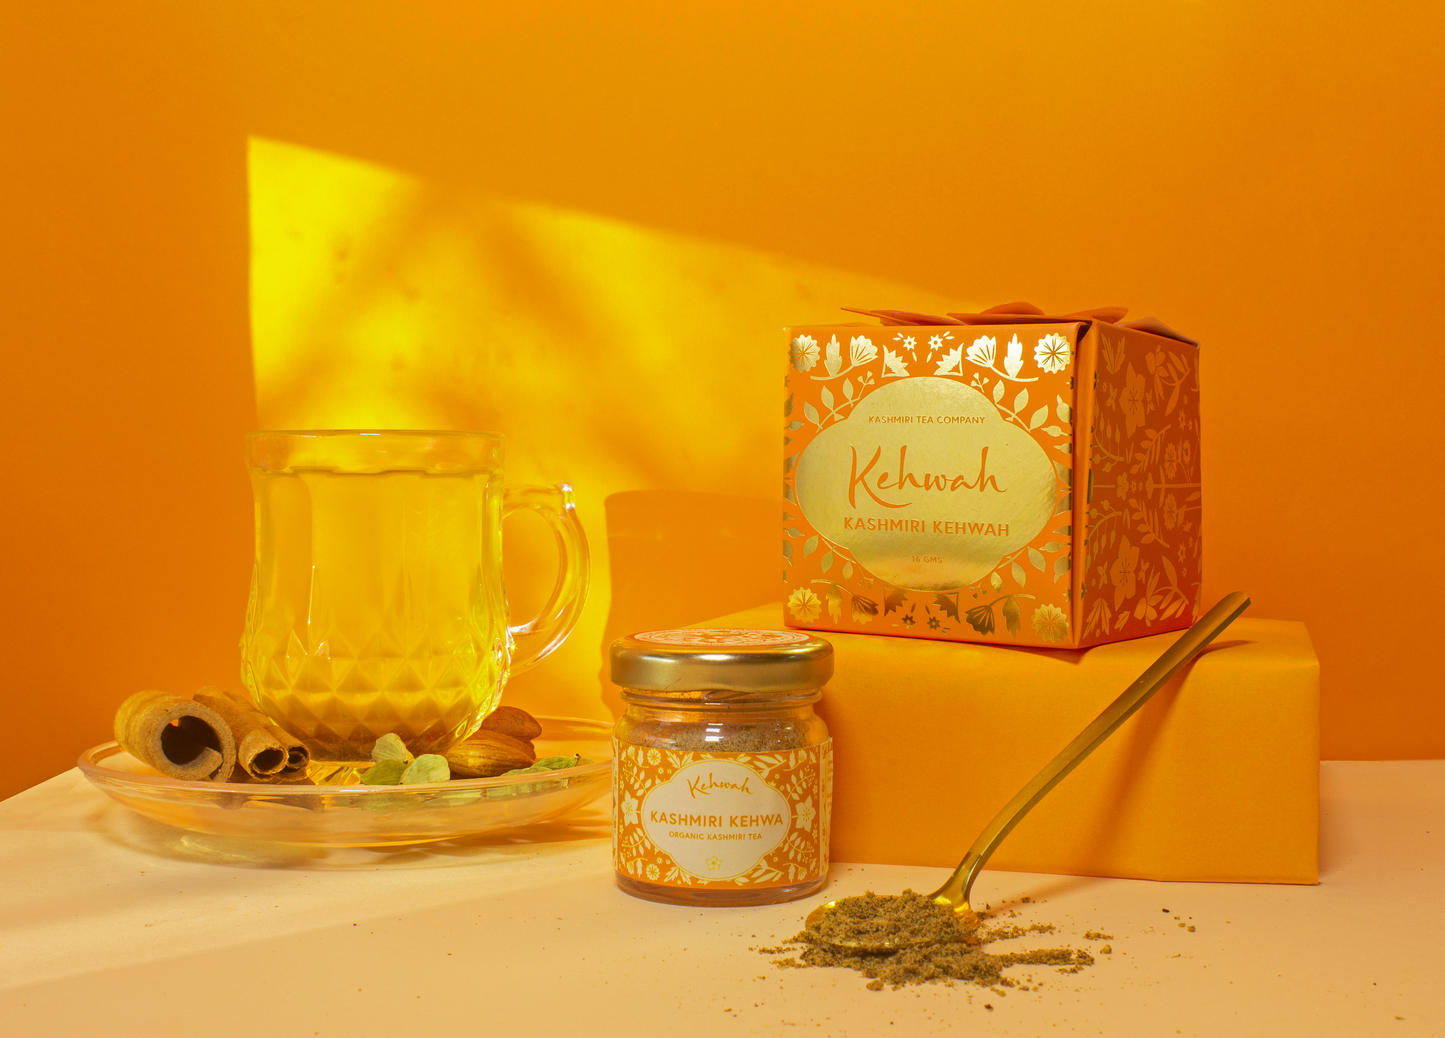 Kashmiri Kehwah - 100% organic cardamom tea